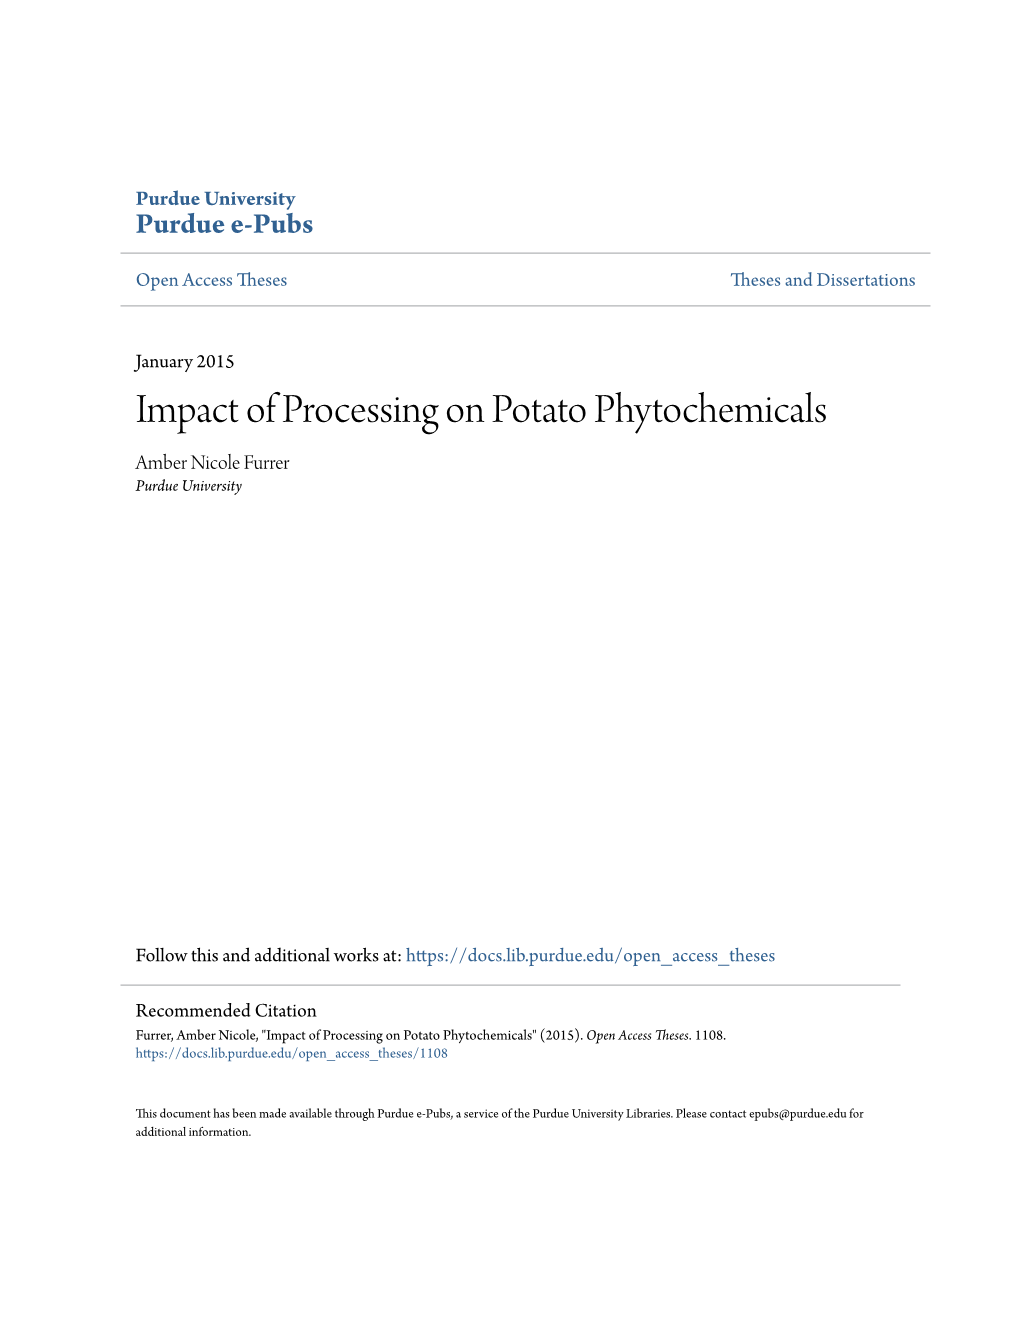 Impact of Processing on Potato Phytochemicals Amber Nicole Furrer Purdue University